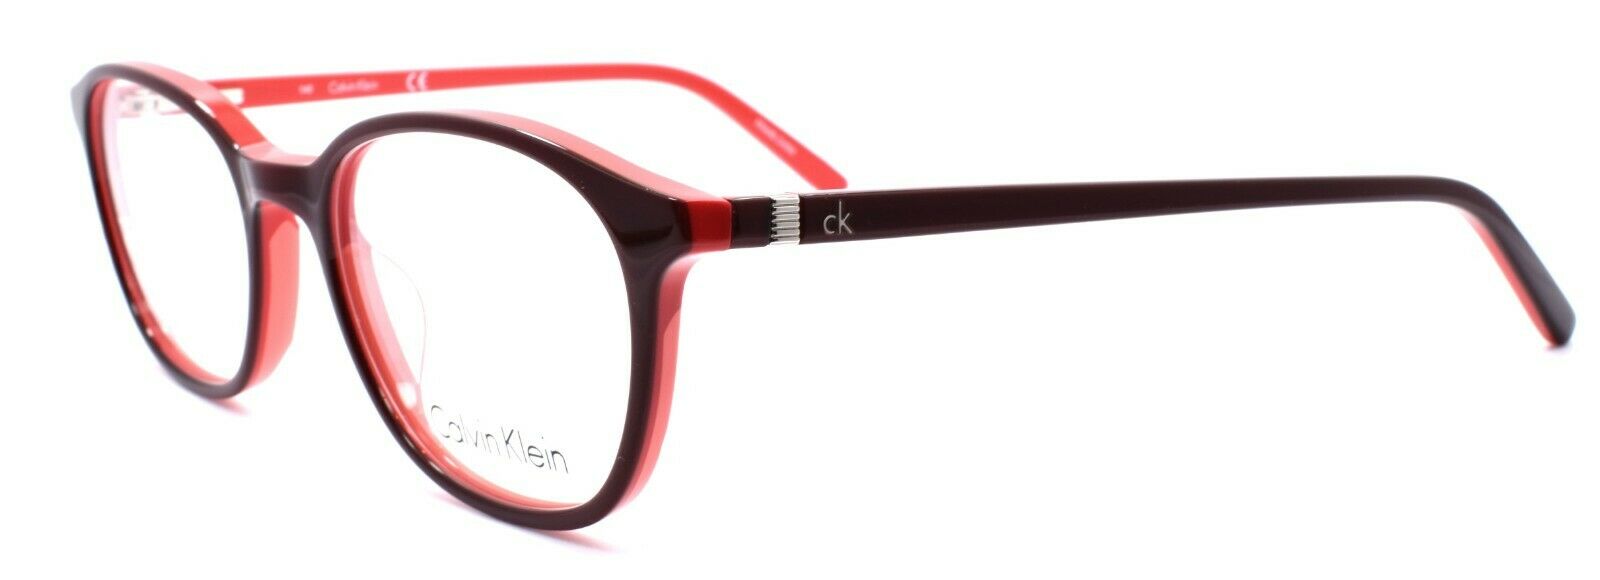 1-Calvin Klein CK5878 603 Unisex Eyeglasses Frames SMALL 49-18-140 Bordeaux Red-750779078242-IKSpecs